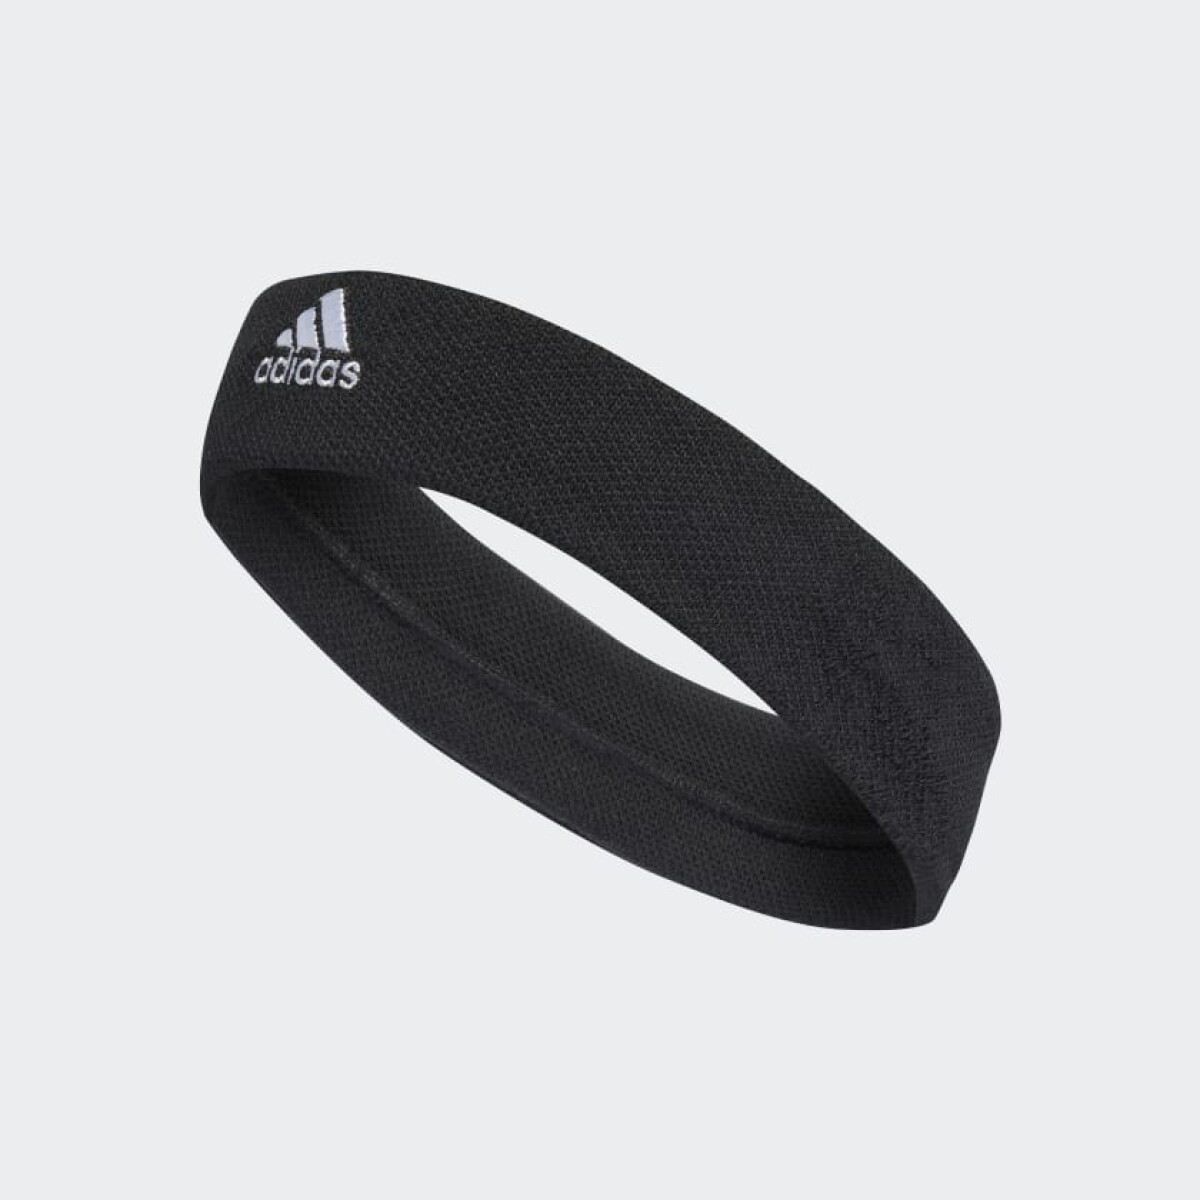 Vincha Adidas Tenis Headband C - S/C 